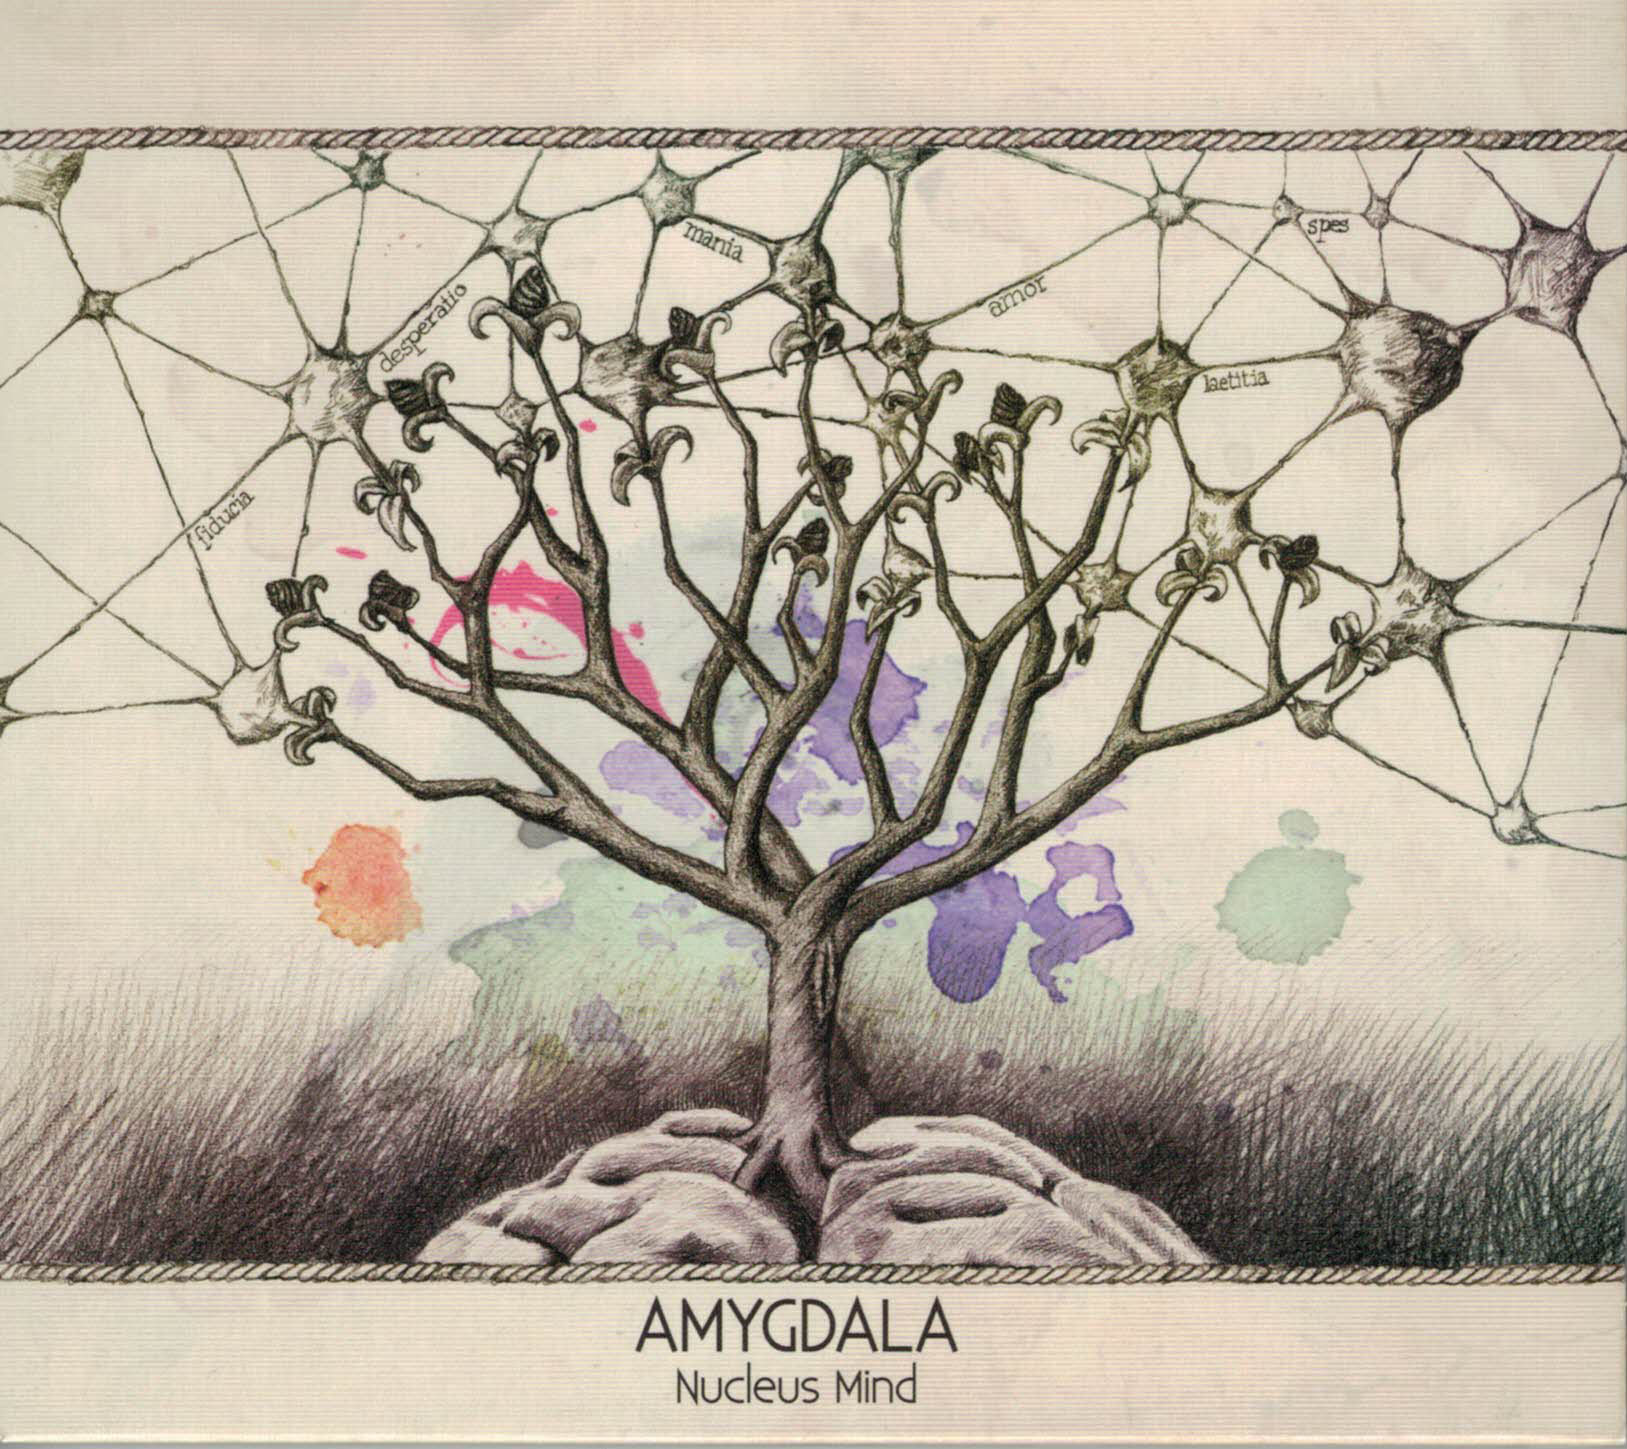 Nucleus Mind - Amygdala; 2016 Cover drawing Astrid Eidler, design & artwork Roman Voglauer